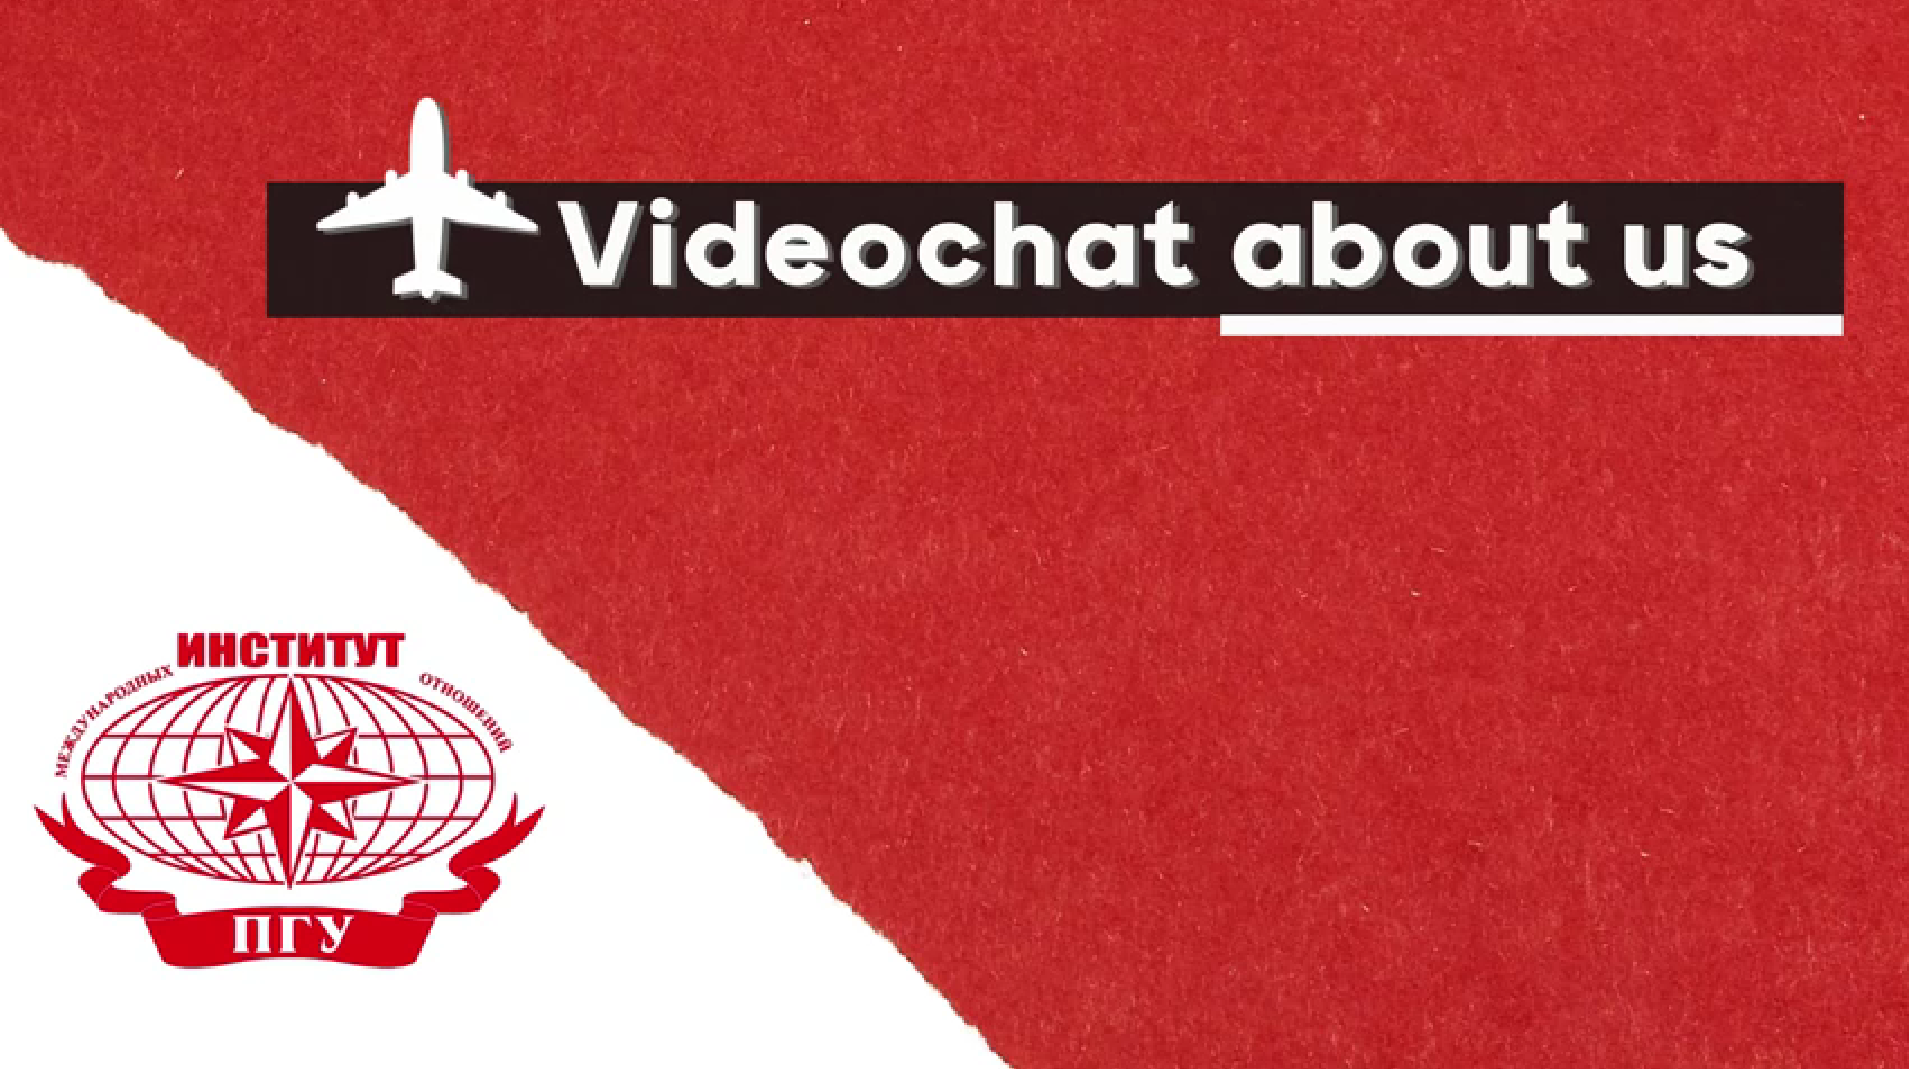 Первый эпизод проекта "Видеочат про нас"
The first episode of the project "Videochat about us"